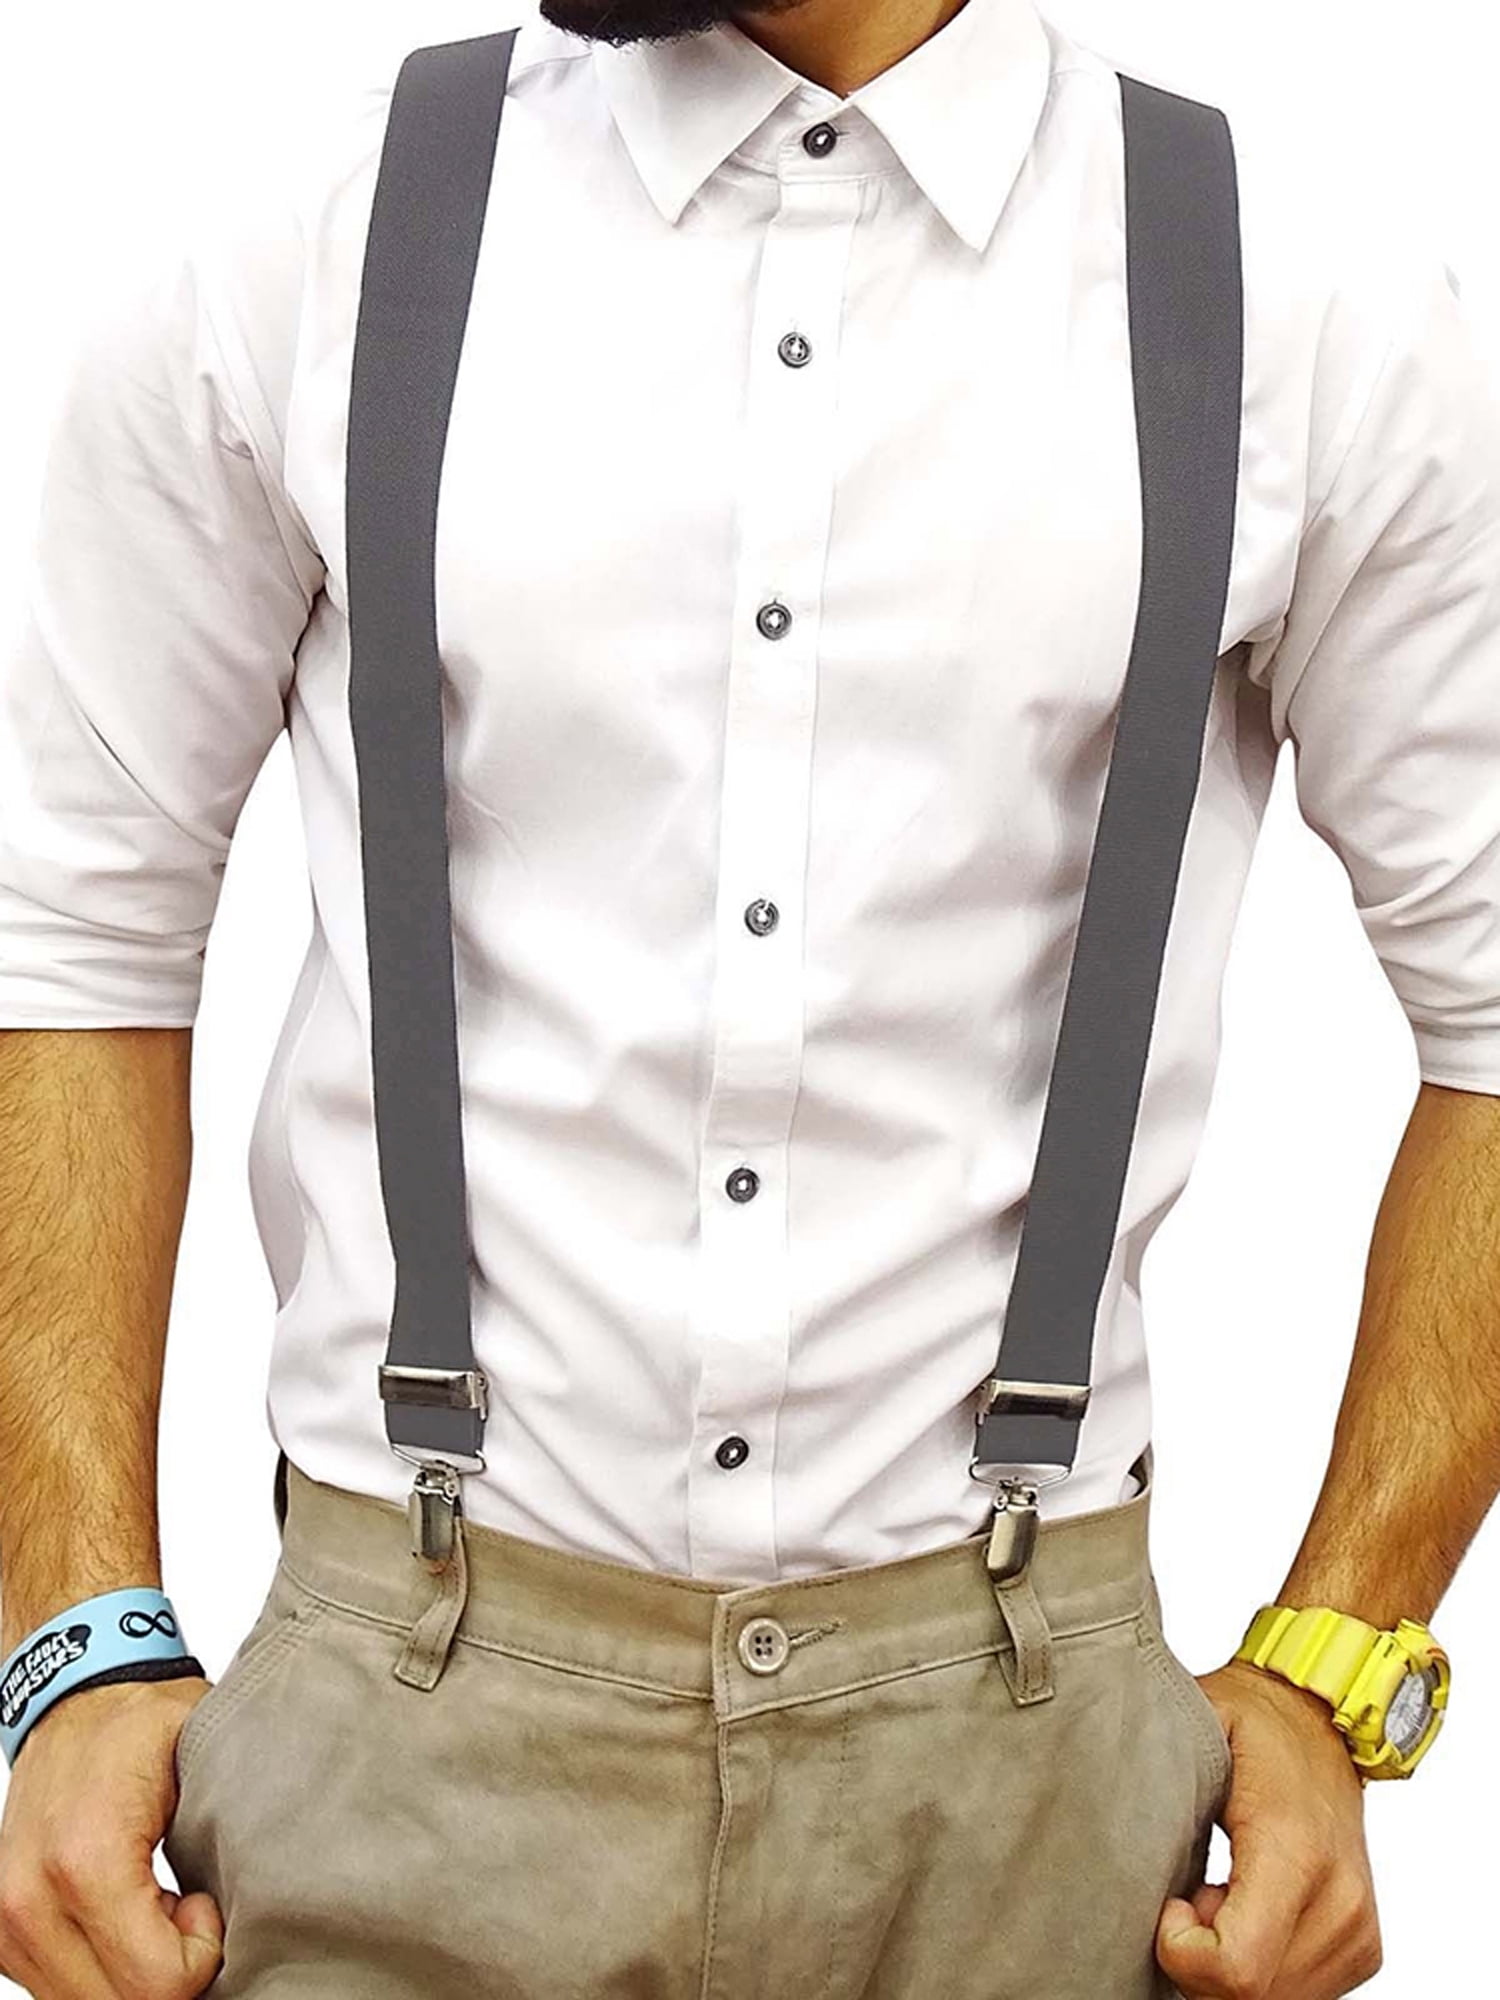 Men's Clip-On Floral Suspenders Y-Back Braces Adjustable Elastic Straps